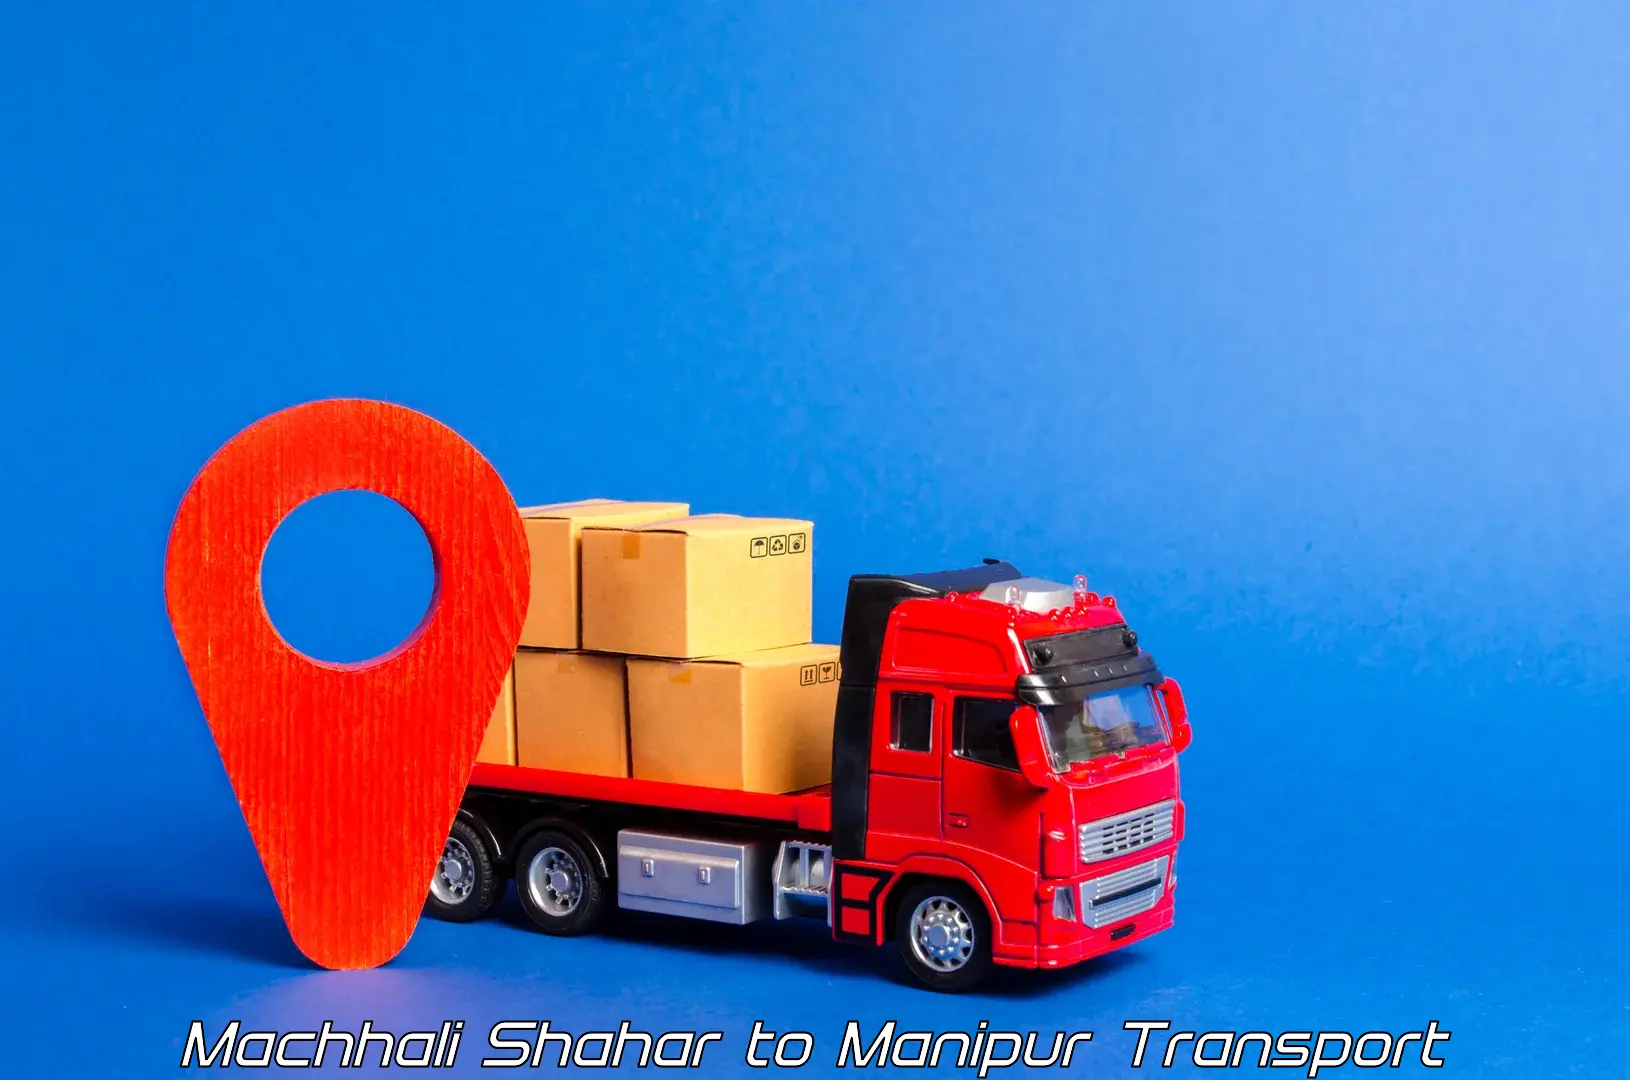 Furniture transport service Machhali Shahar to Manipur